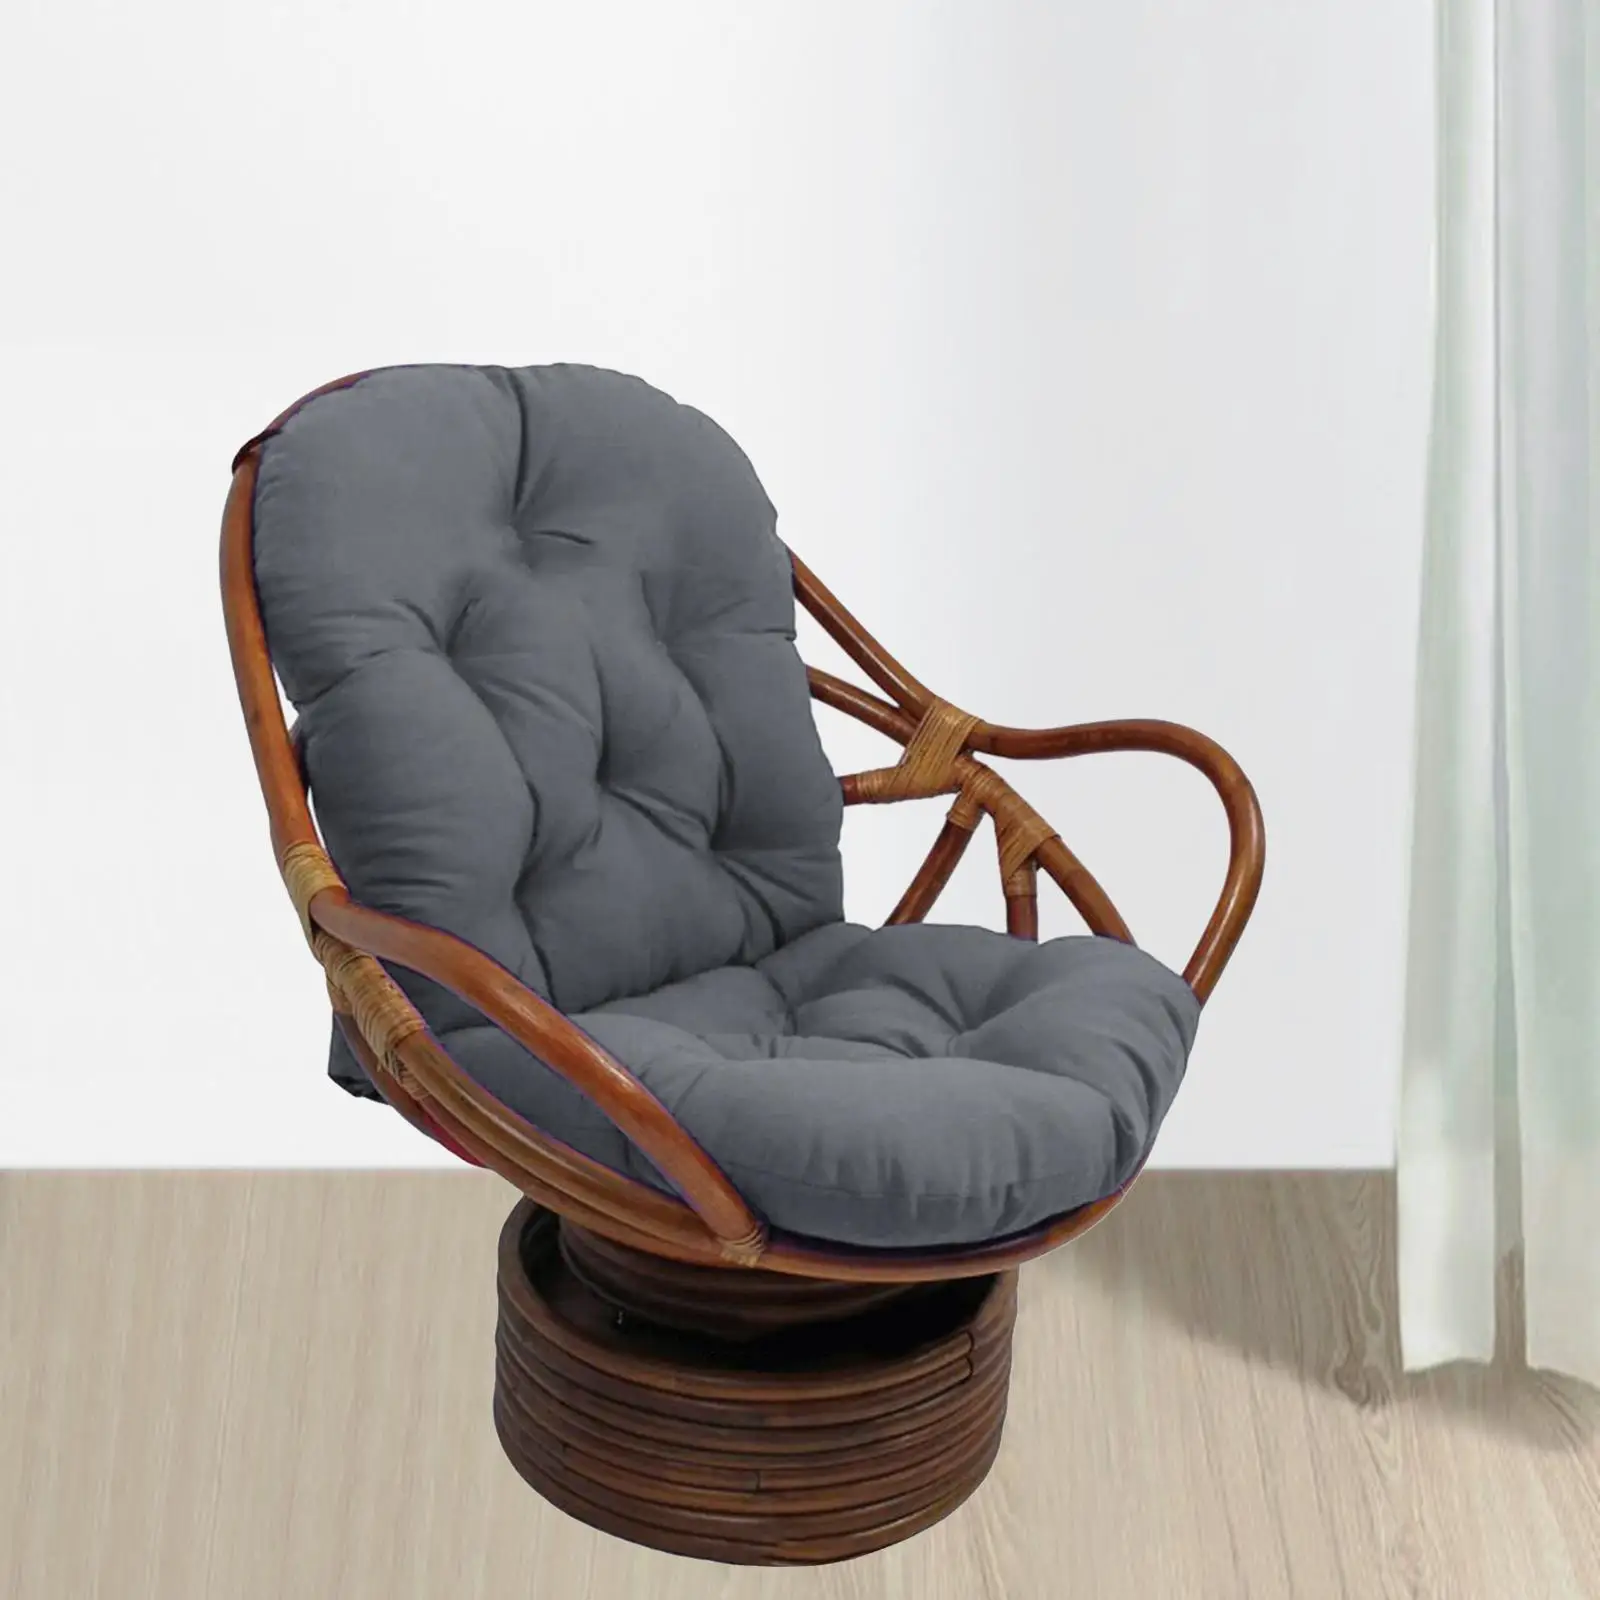 Textured Rattan Wicker Swivel Rocker Chair Cushion Seat Cushions